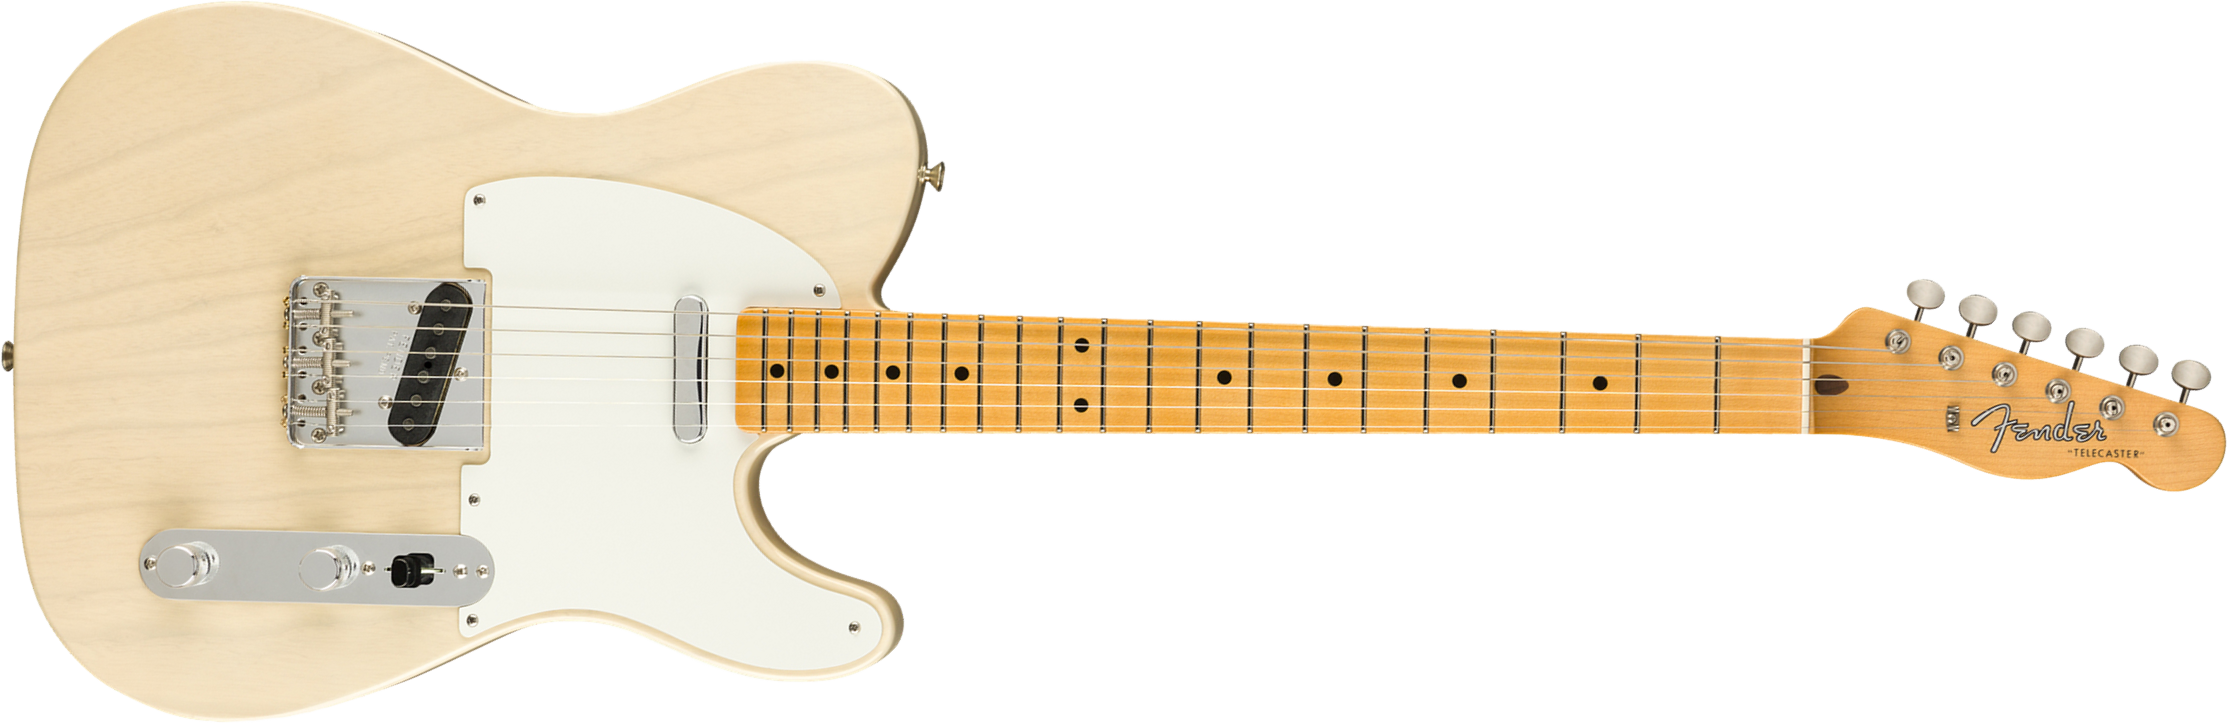 Fender Custom Shop Tele Vintage Custom 1958 Top Load Ltd Mn - Nos Aged White Blonde - Guitarra eléctrica con forma de tel - Main picture